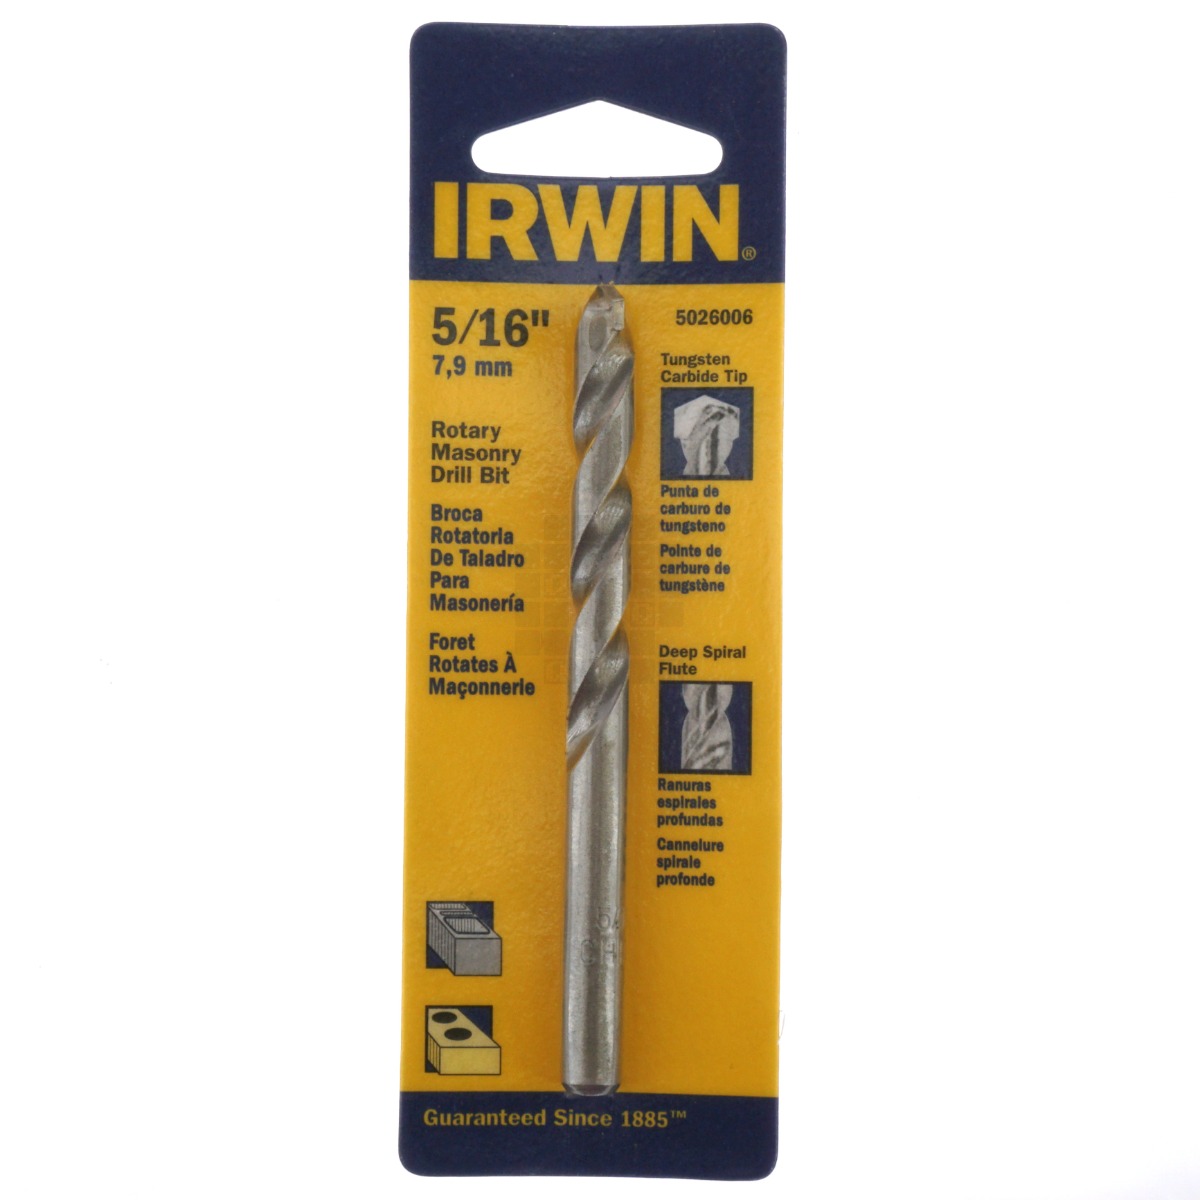 Irwin 5026006 5/16" Rotary Masonry Drill Bit, Tungsten Carbide Tip